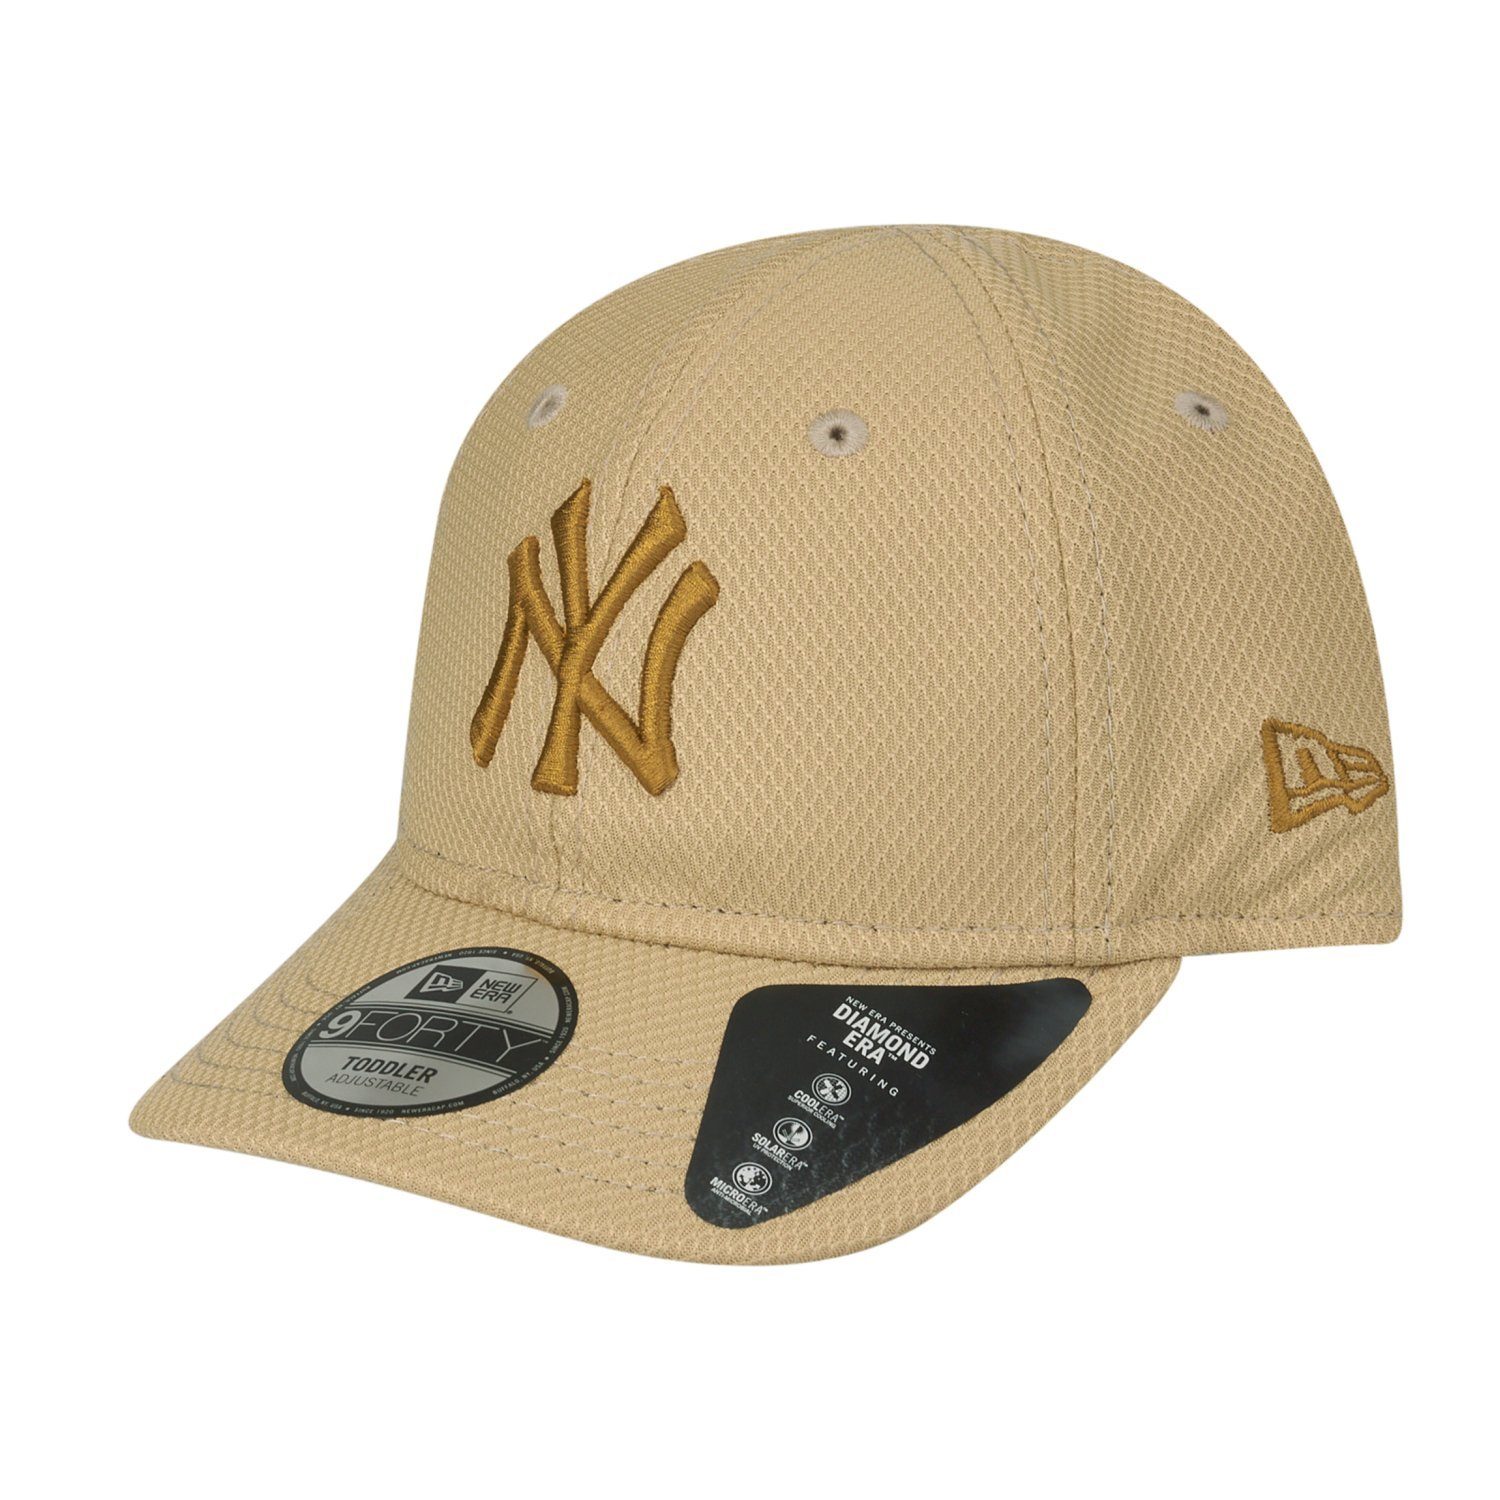 New New Cap Era Gold 9FORTY Yankees Baseball York DIAMOND